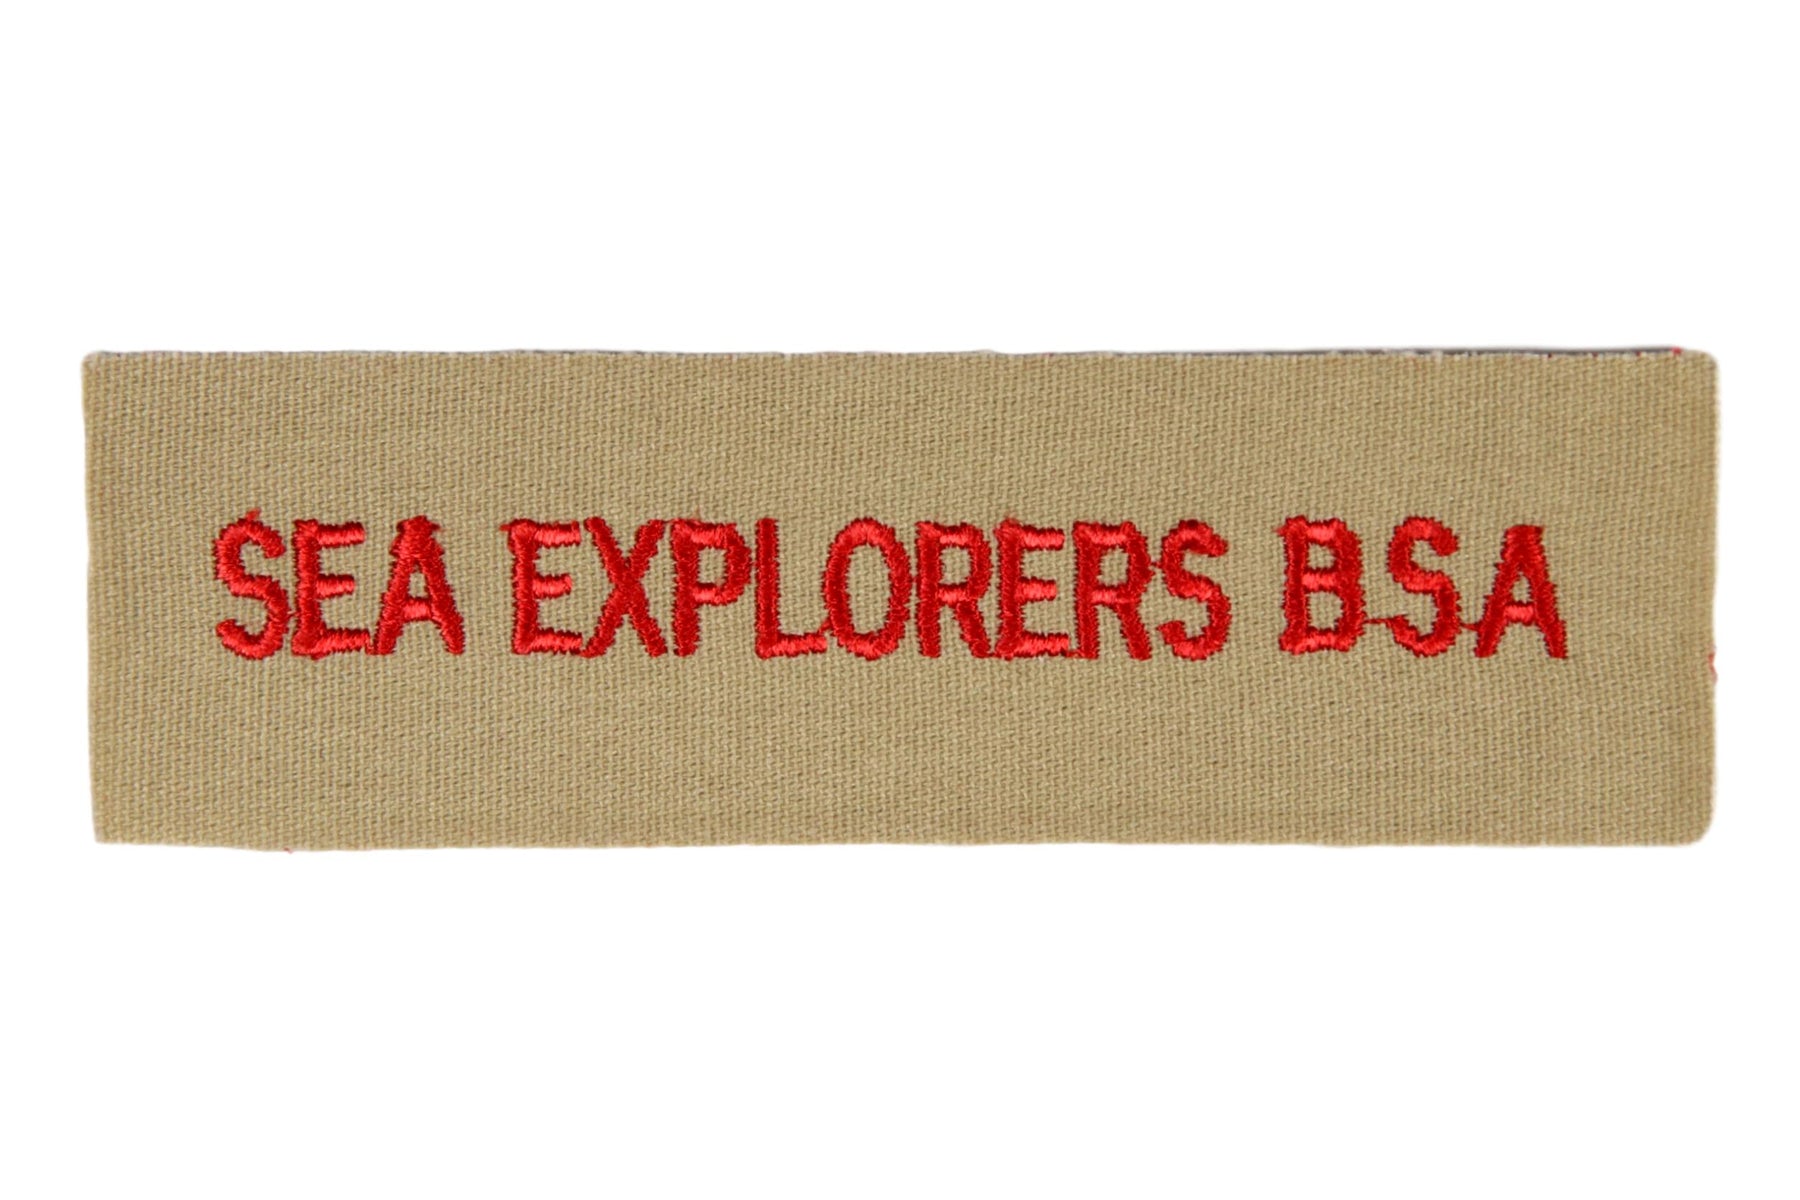 Sea Explorers BSA Shirt Strip on Tan